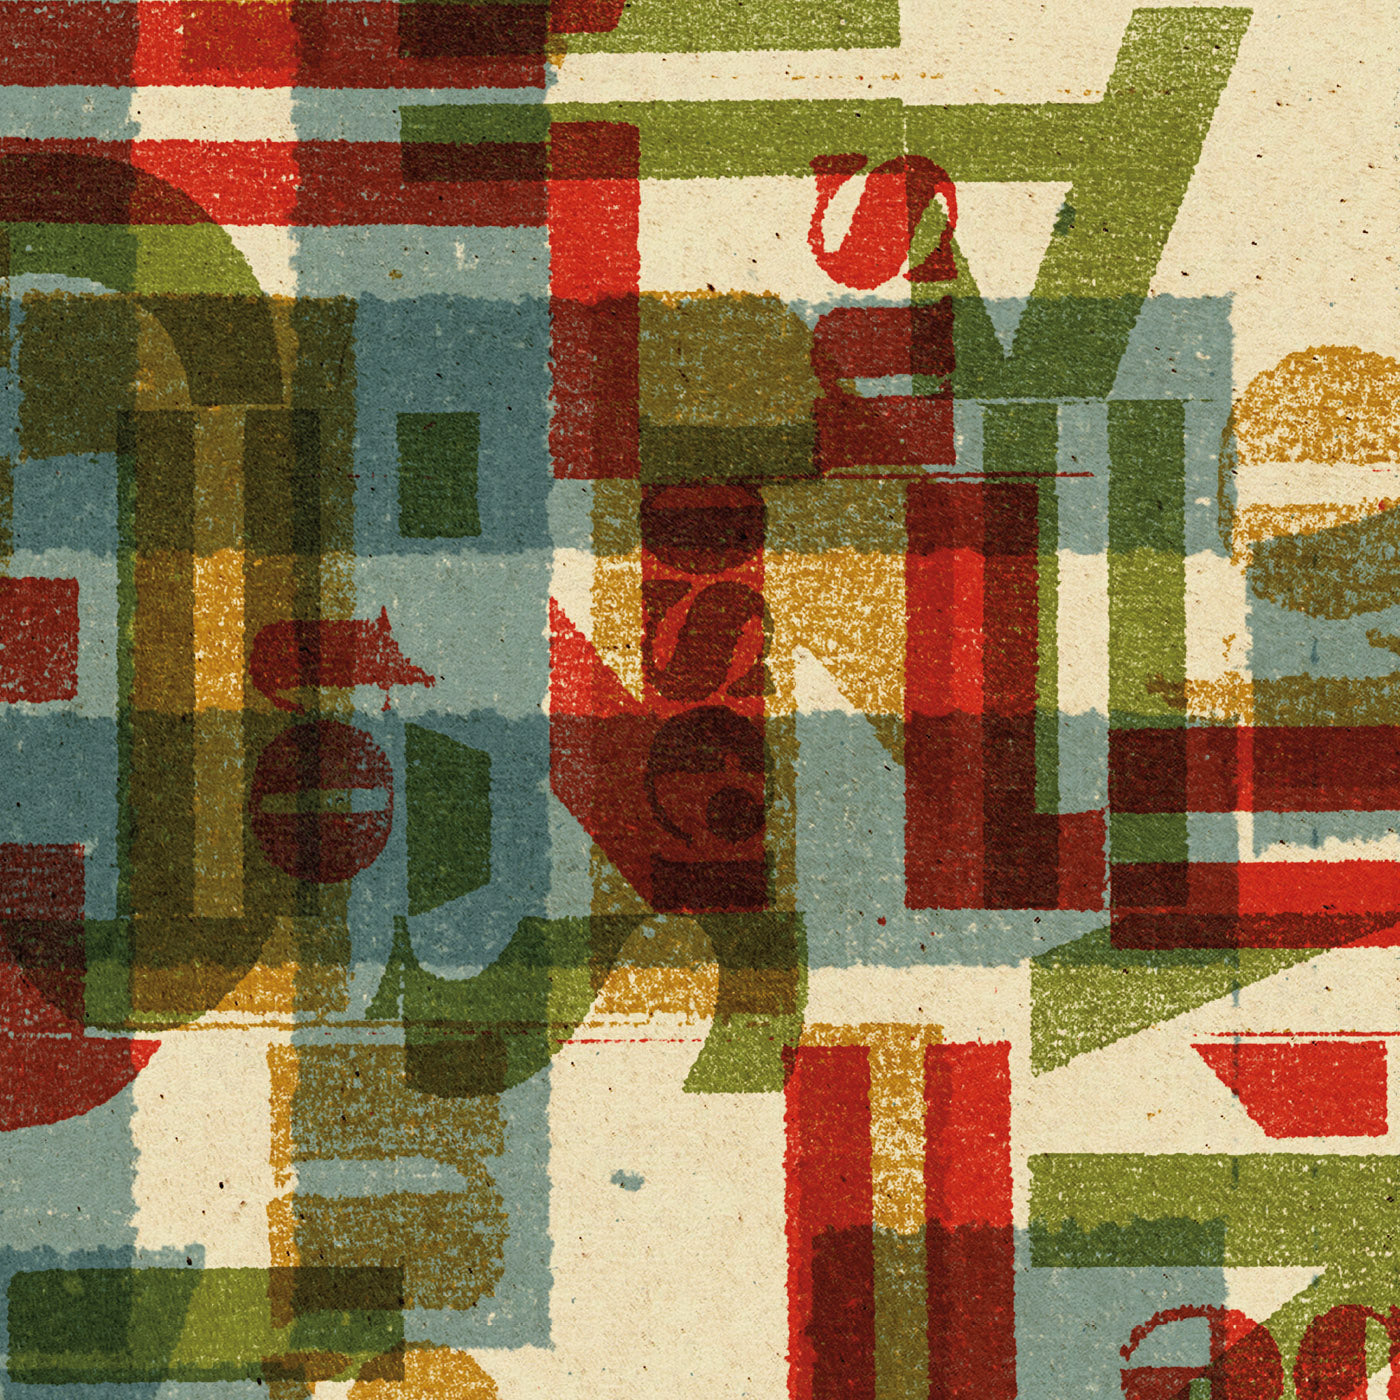 Constructivist Typographic Collage Print